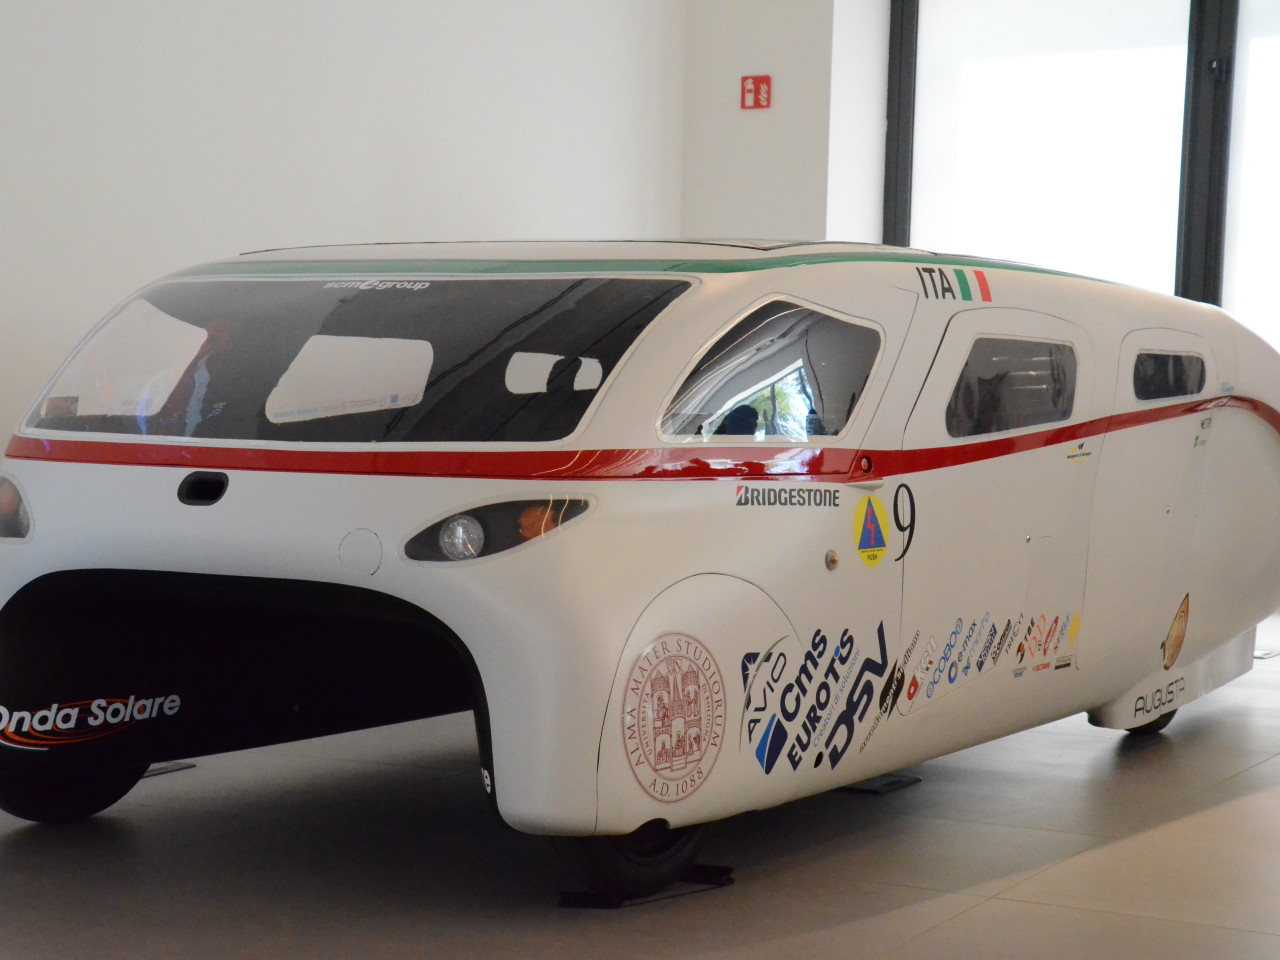 The solar electric vehicle Emilia 4